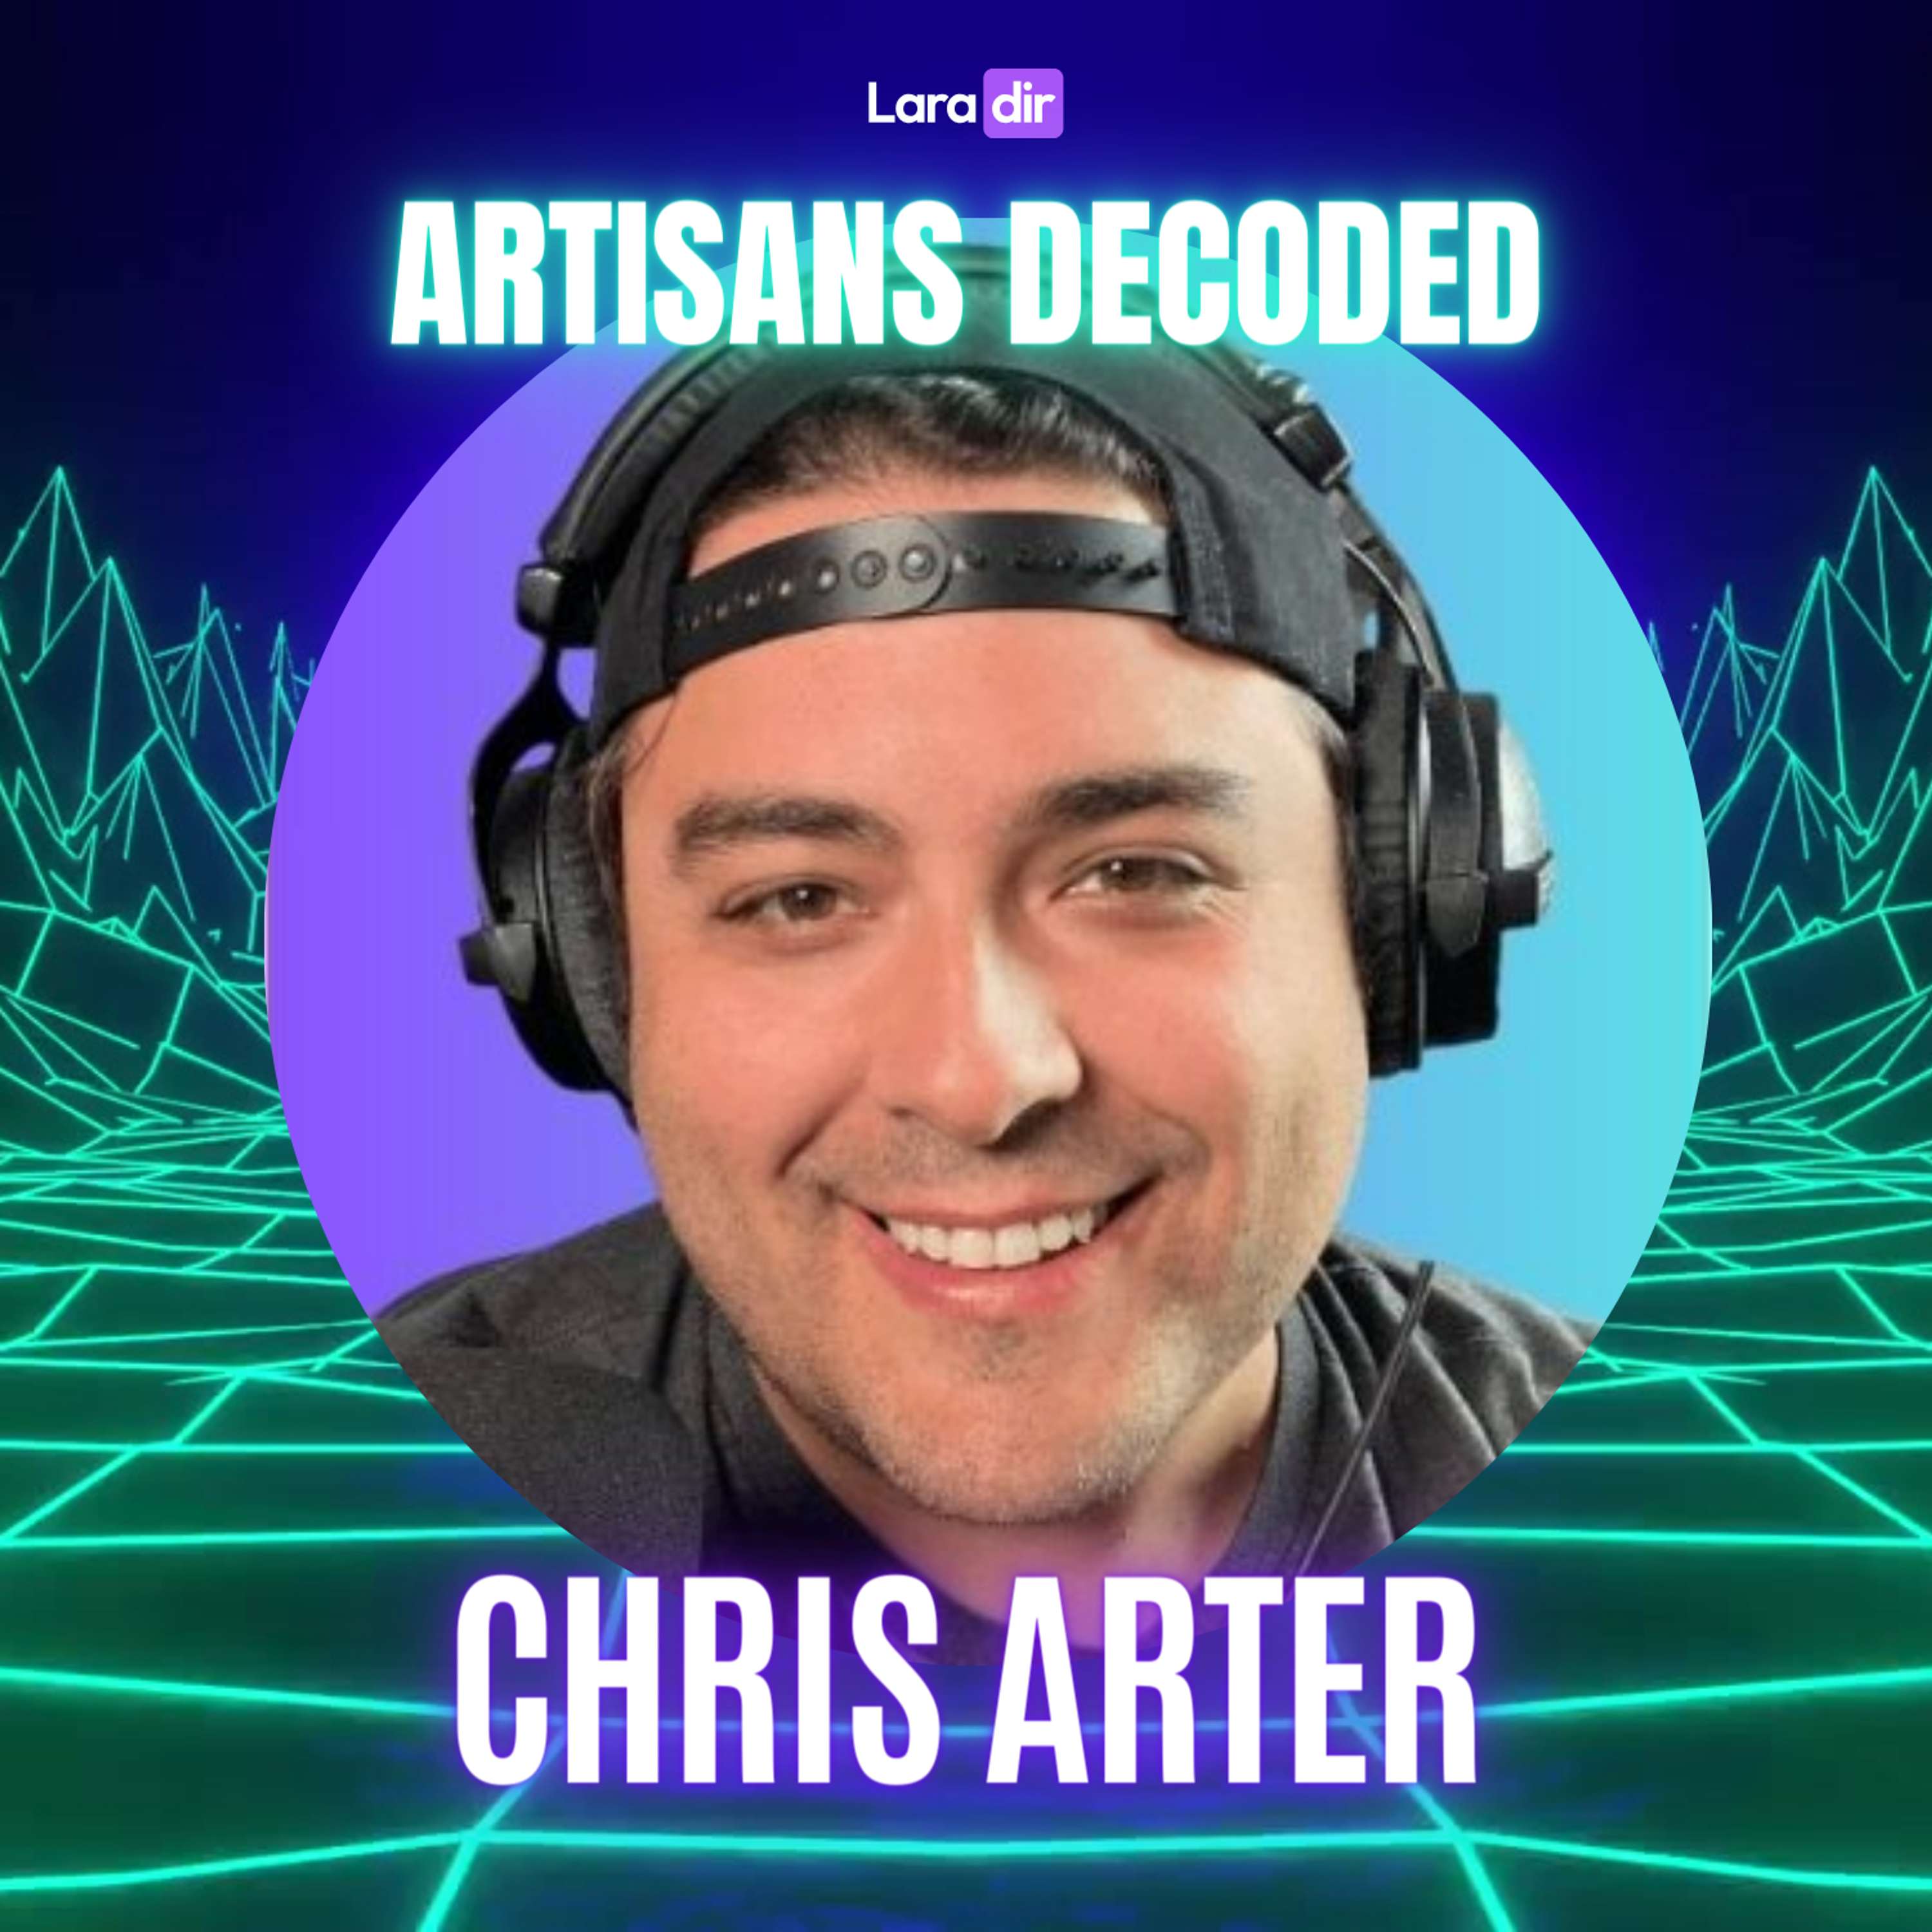 Chris Arter